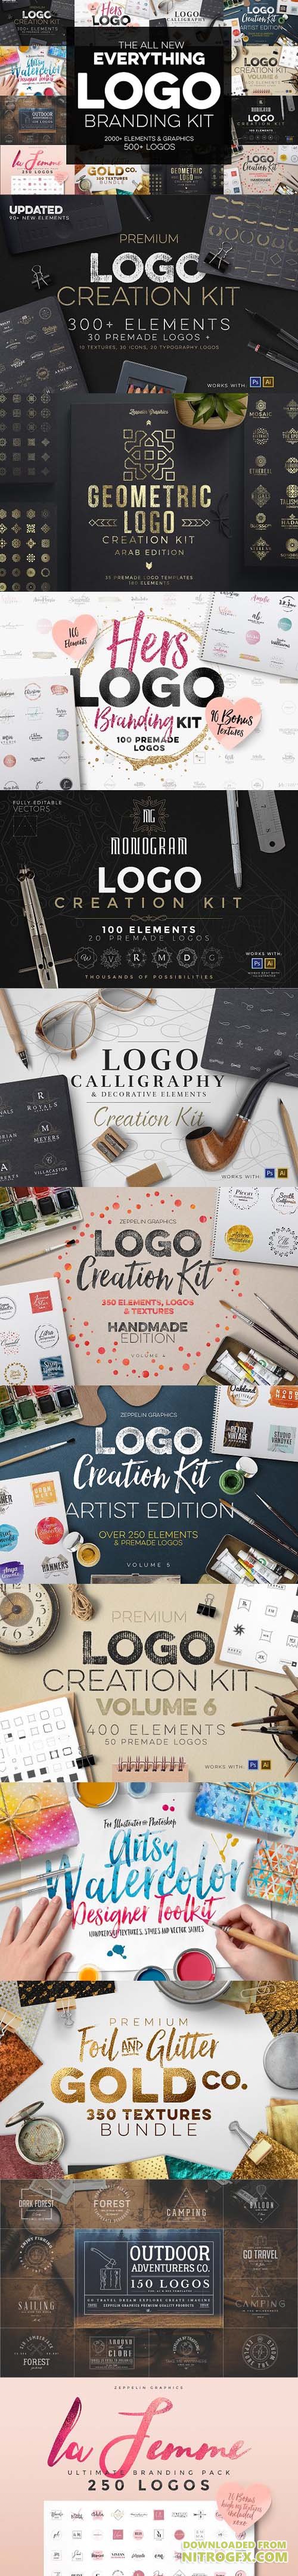 CreativeMarket - The Best Logo Creation Kit Bundle - 1847974